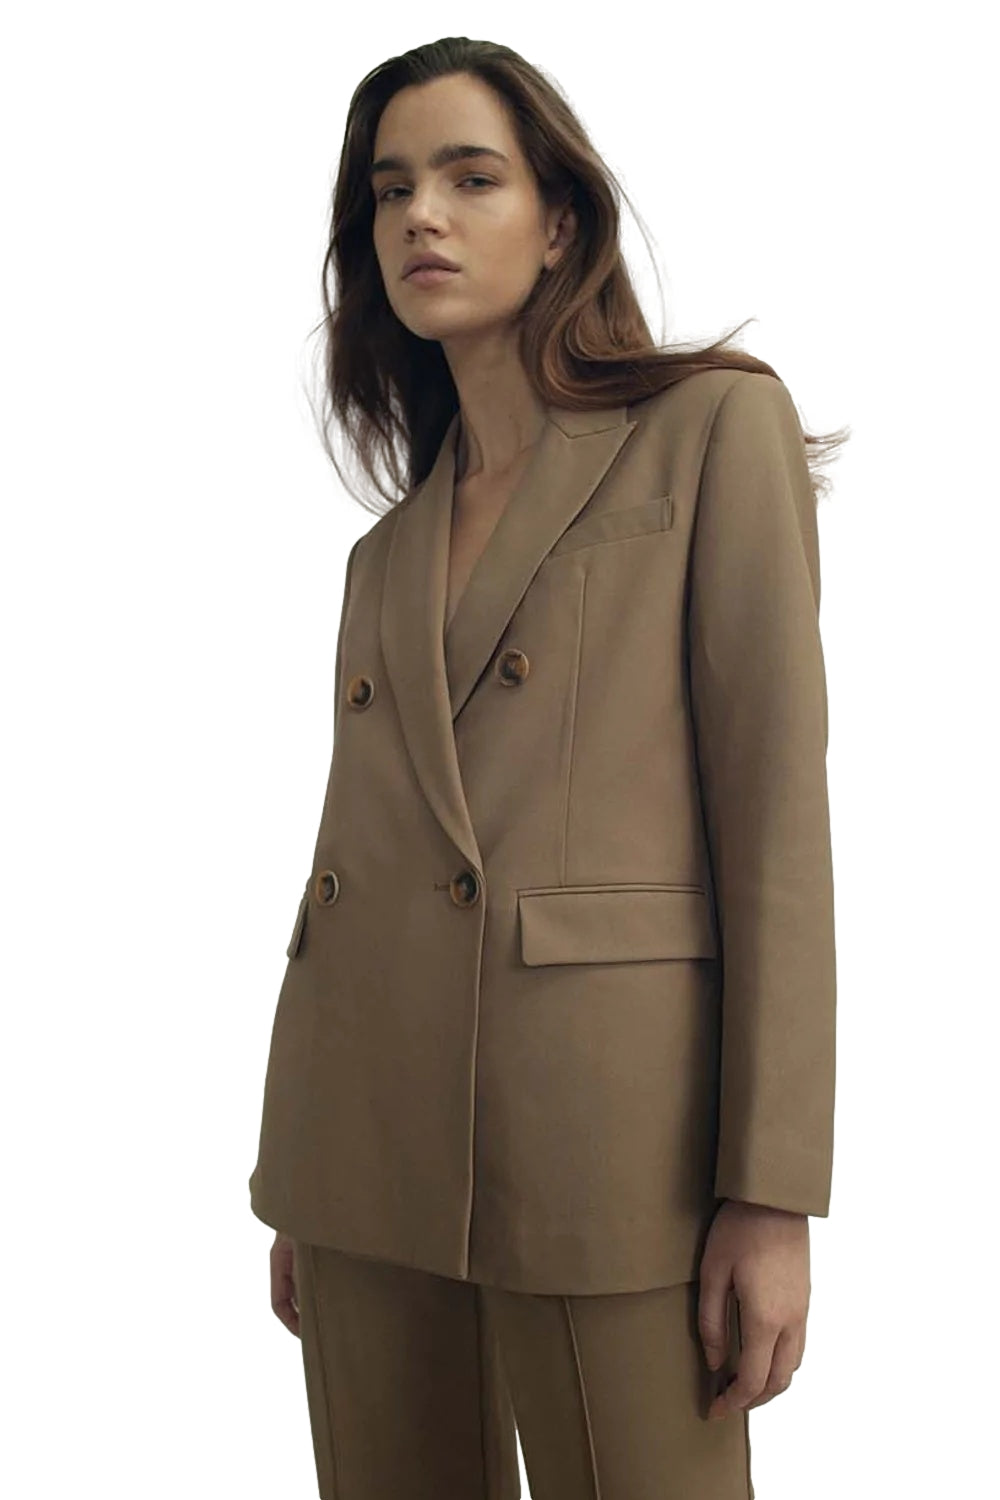 FWSS Tailored Suit Jacket Dressjakke Oliven - [shop.name]